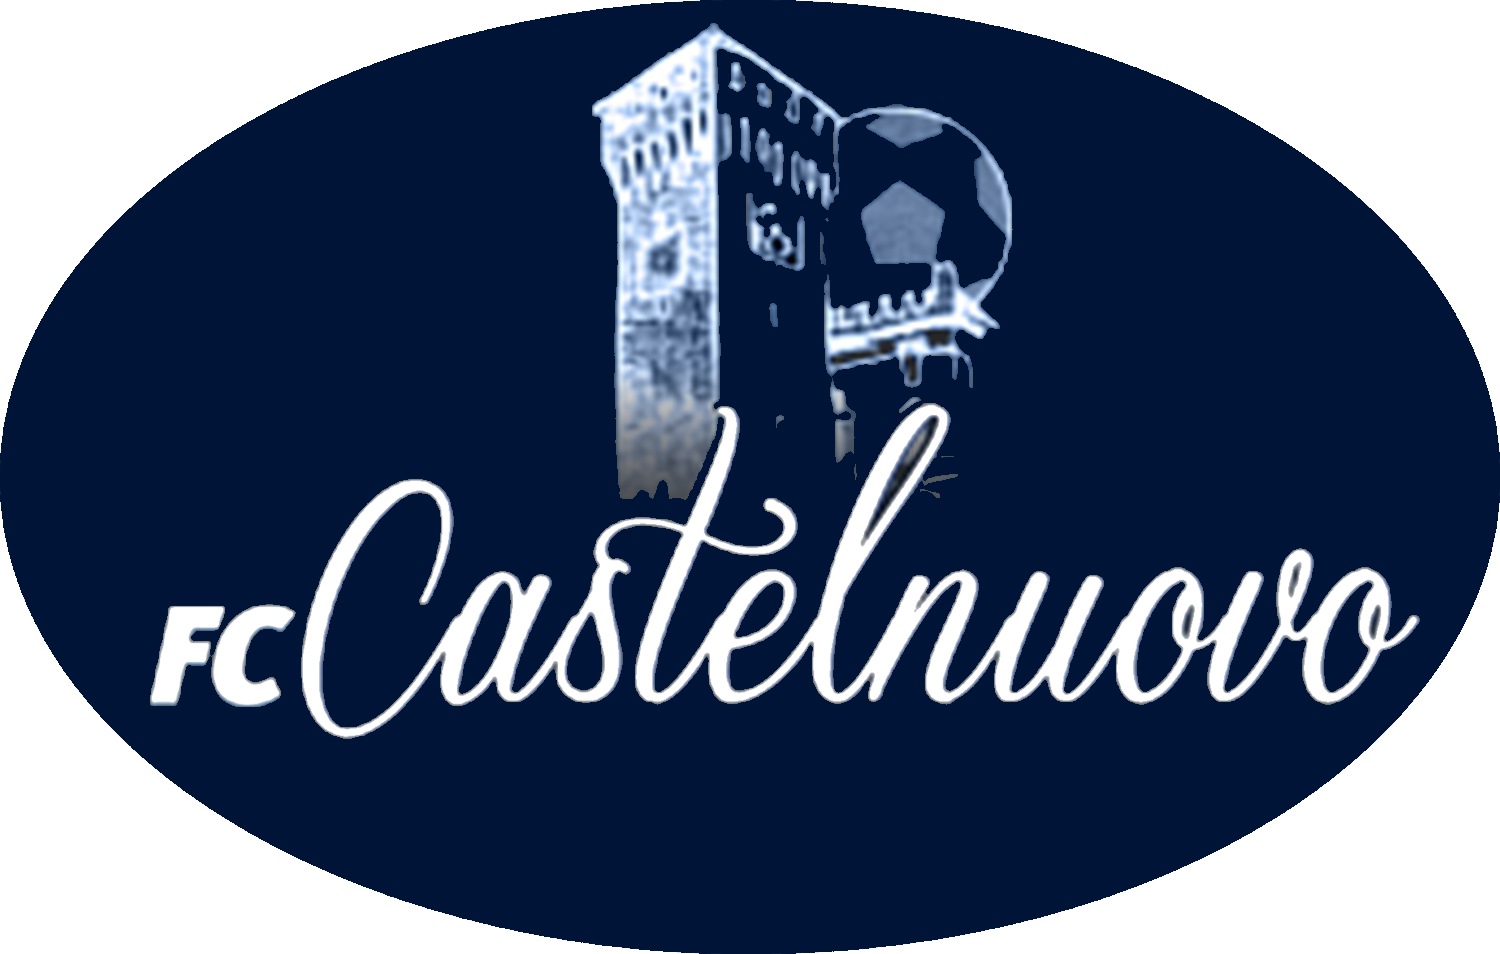 FC CASTELNUOVO v COLOMBARO